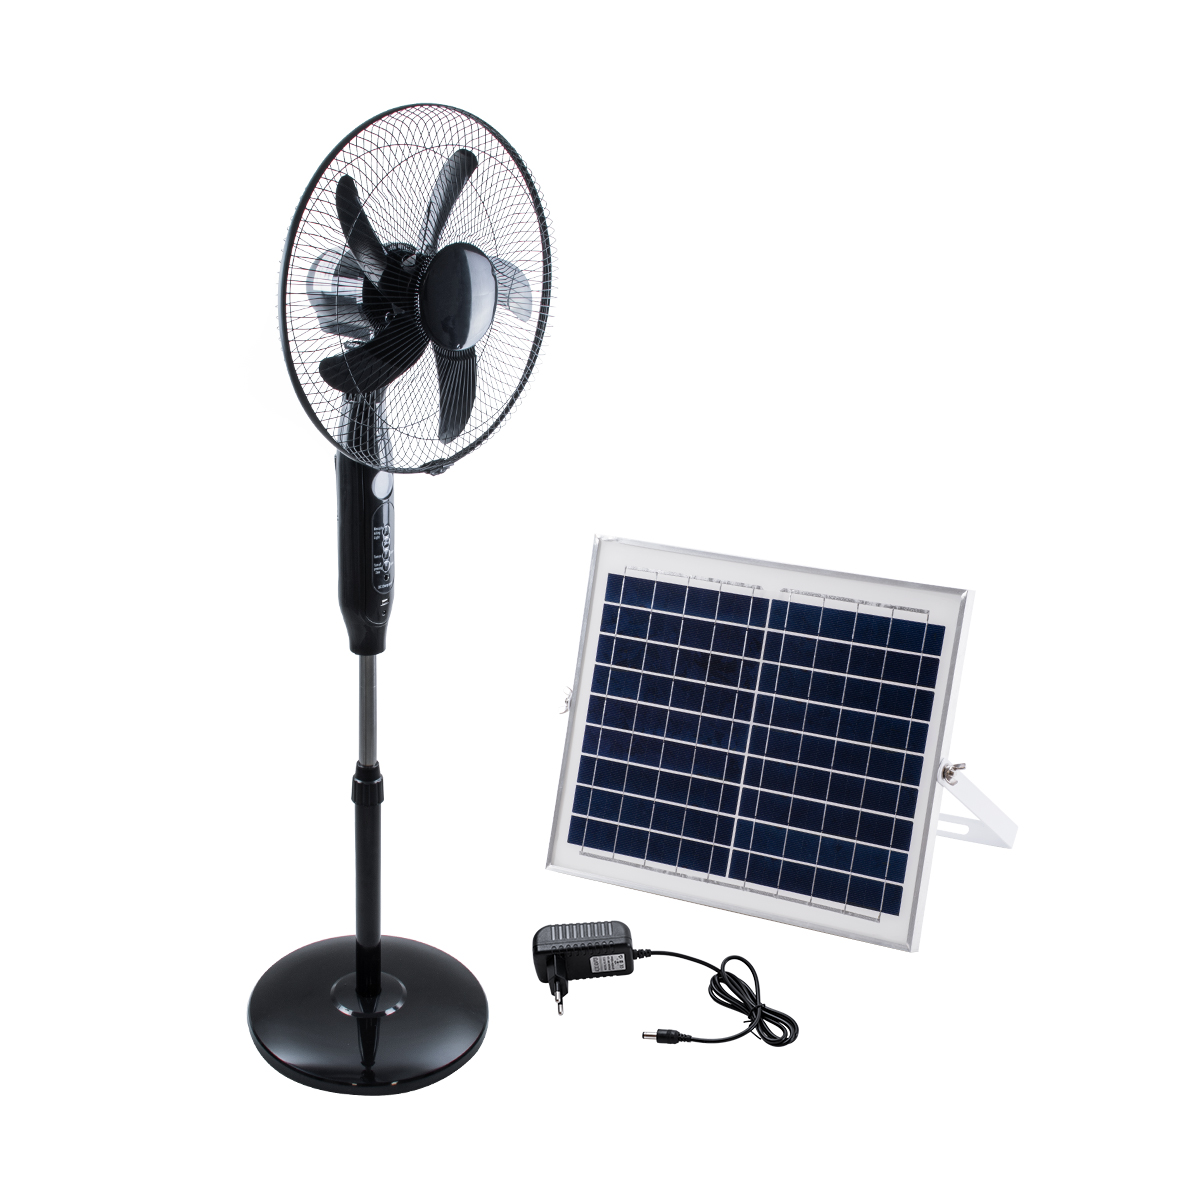 GloboStar® SOLARE-FAN 85358 Solar Fan Αυτόνομος Ηλιακός Επιδαπέδιος Ανεμιστήρας 25W 2 Λειτουργιών Ρεύματος με AC 220-240V ή με Φωτοβολταϊκό Panel 9V 15W & Επαναφορτιζόμενη Μπαταρία Li-ion 7.4V 6000mAh – 12 Ταχύτητες – Ασύρματο Χειριστήριο – Ενσωματωμένο USB 2.0 Charger Συσκευών – IP20 – Μ44 x Π37.5 x Υ132cm – Μαύρο – 2 Years Warranty